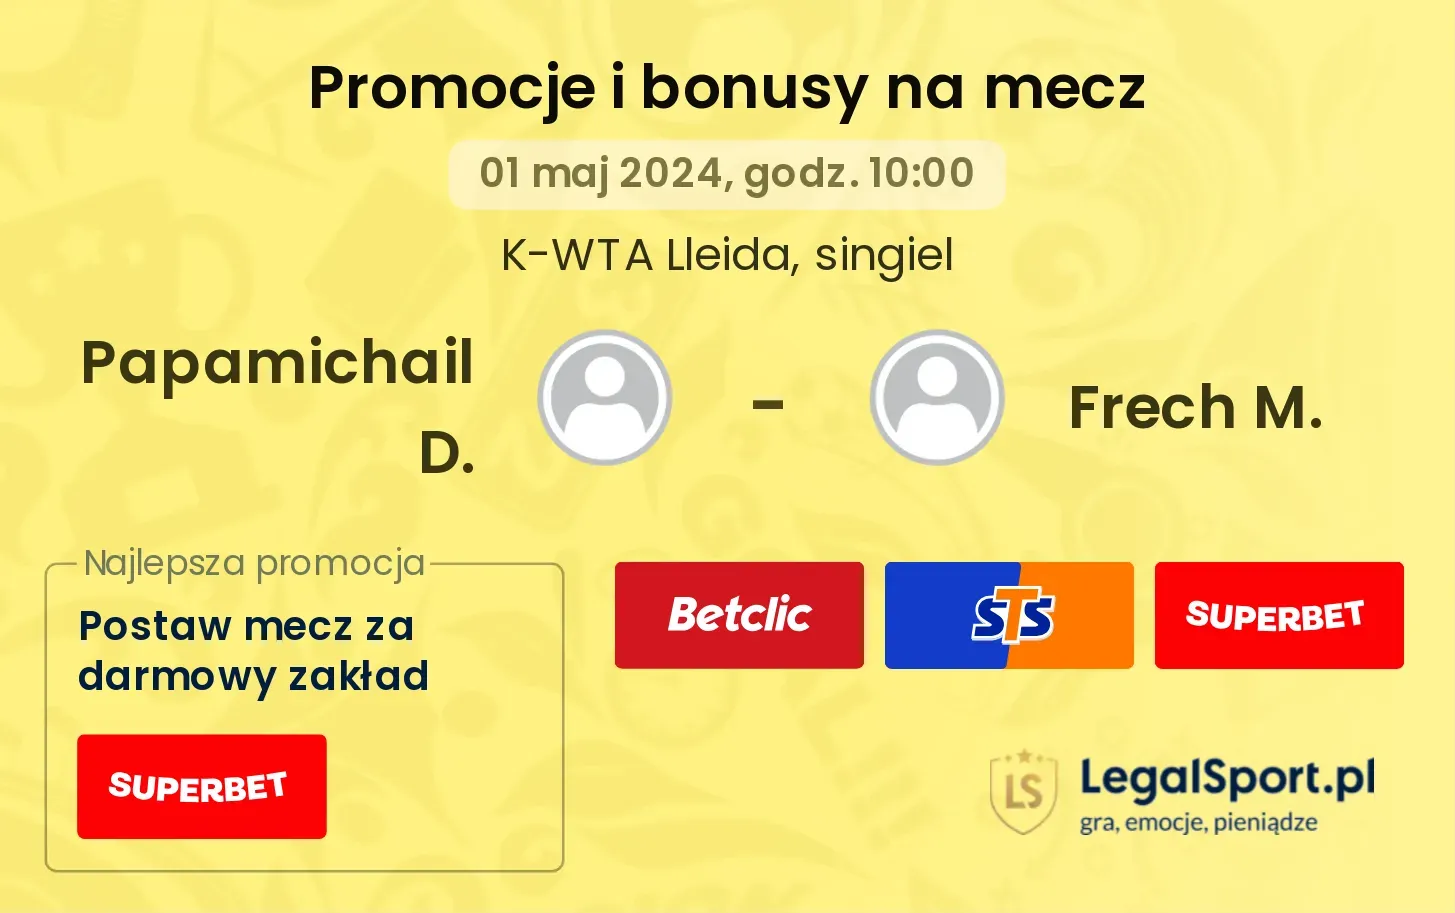 Papamichail D. - Frech M. promocje bonusy na mecz